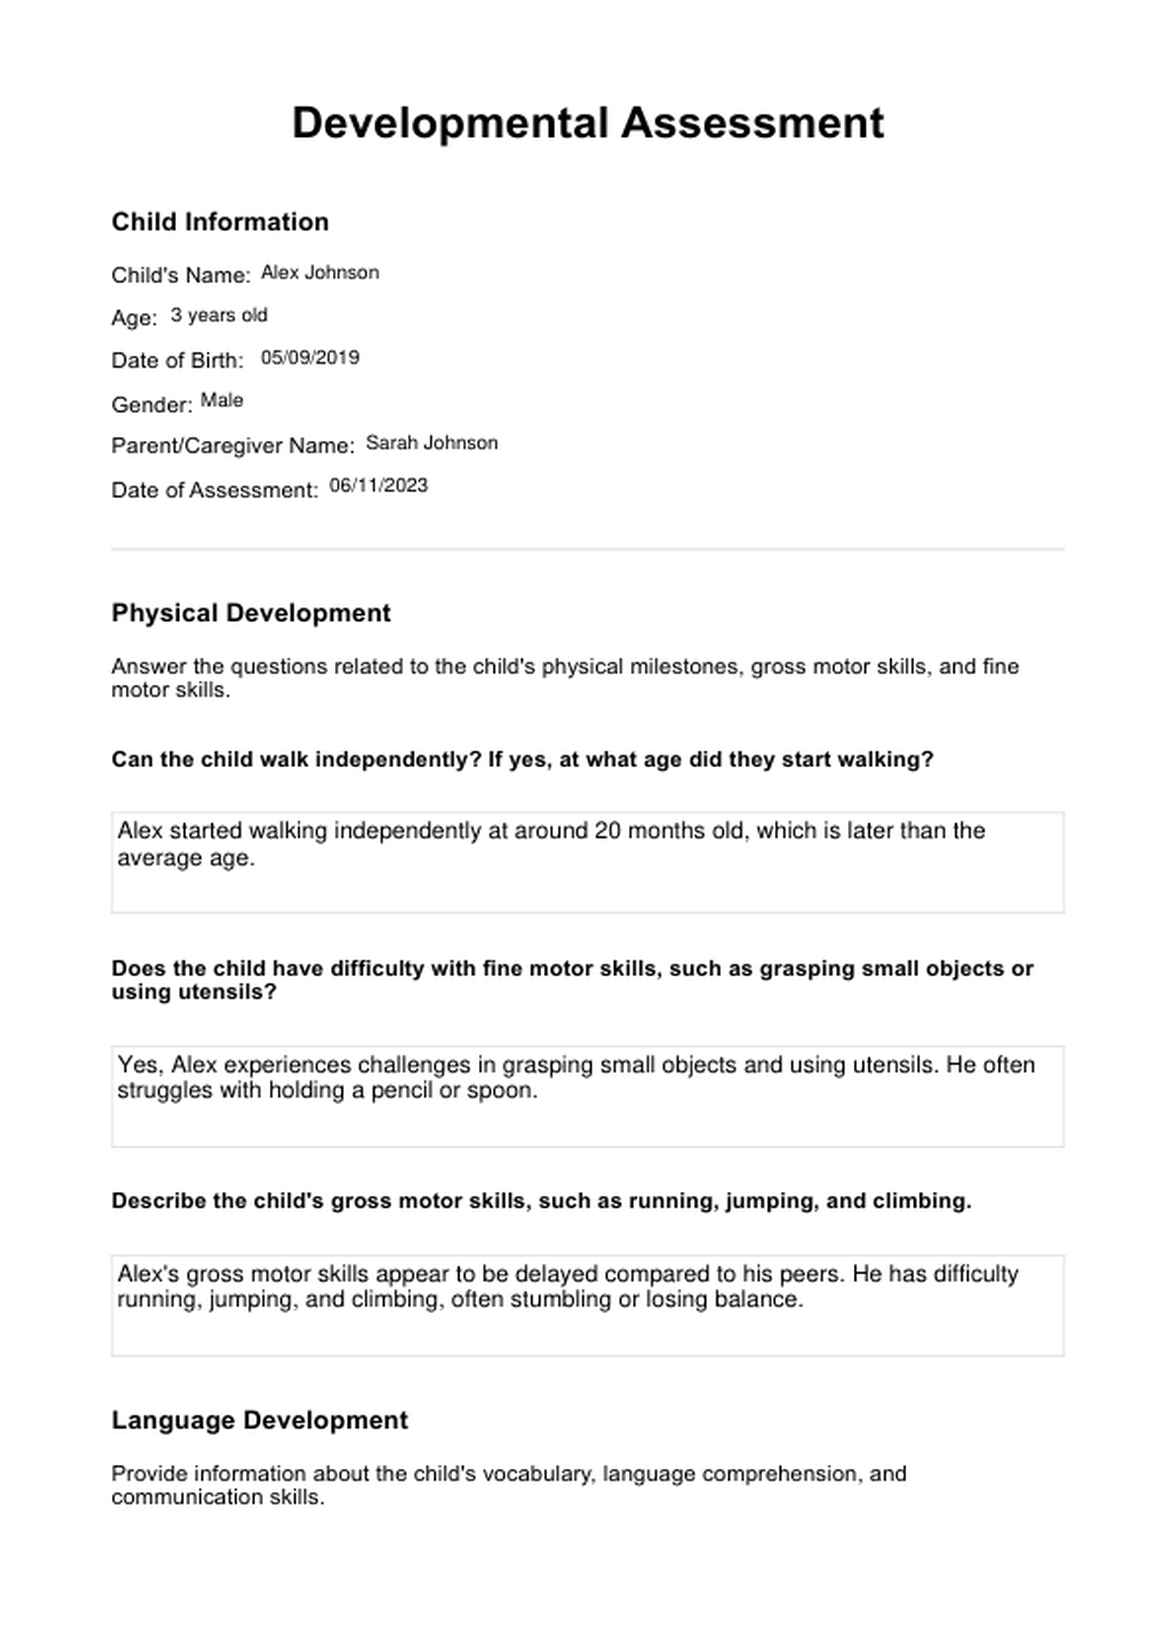 Developmental Assessments PDF Example